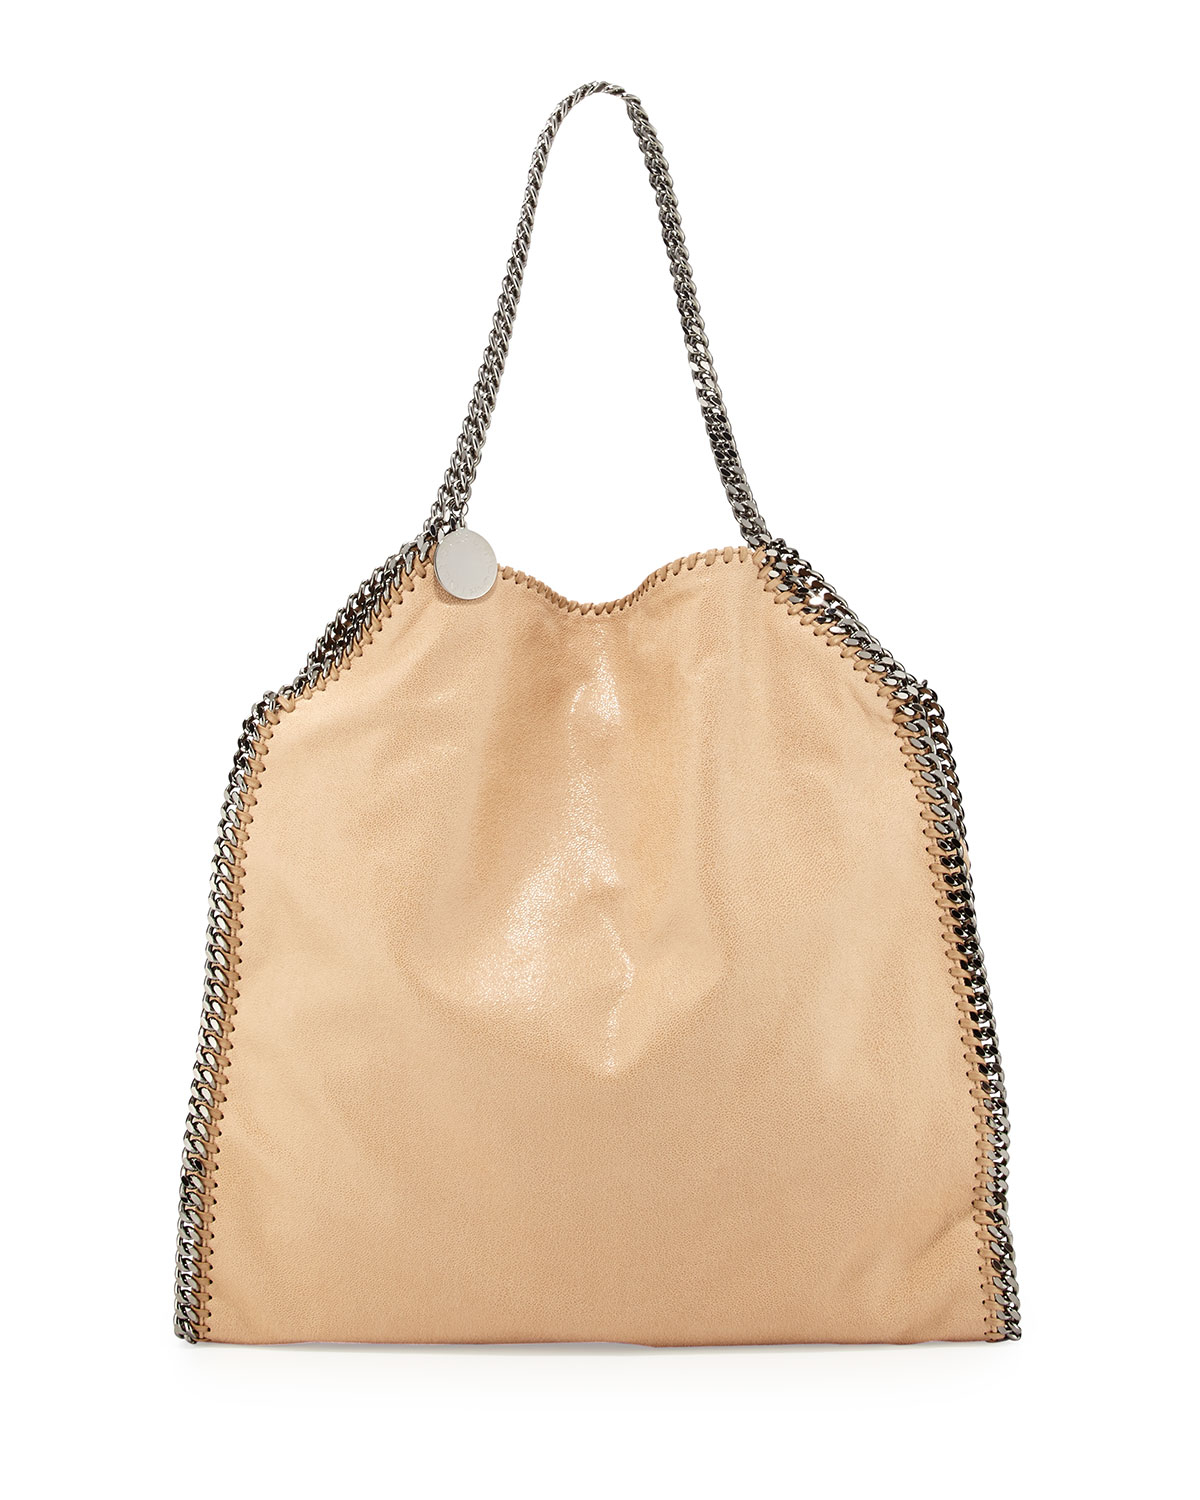 Stella mccartney Falabella Large Faux-Leather Tote Bag in Beige (TAN ...